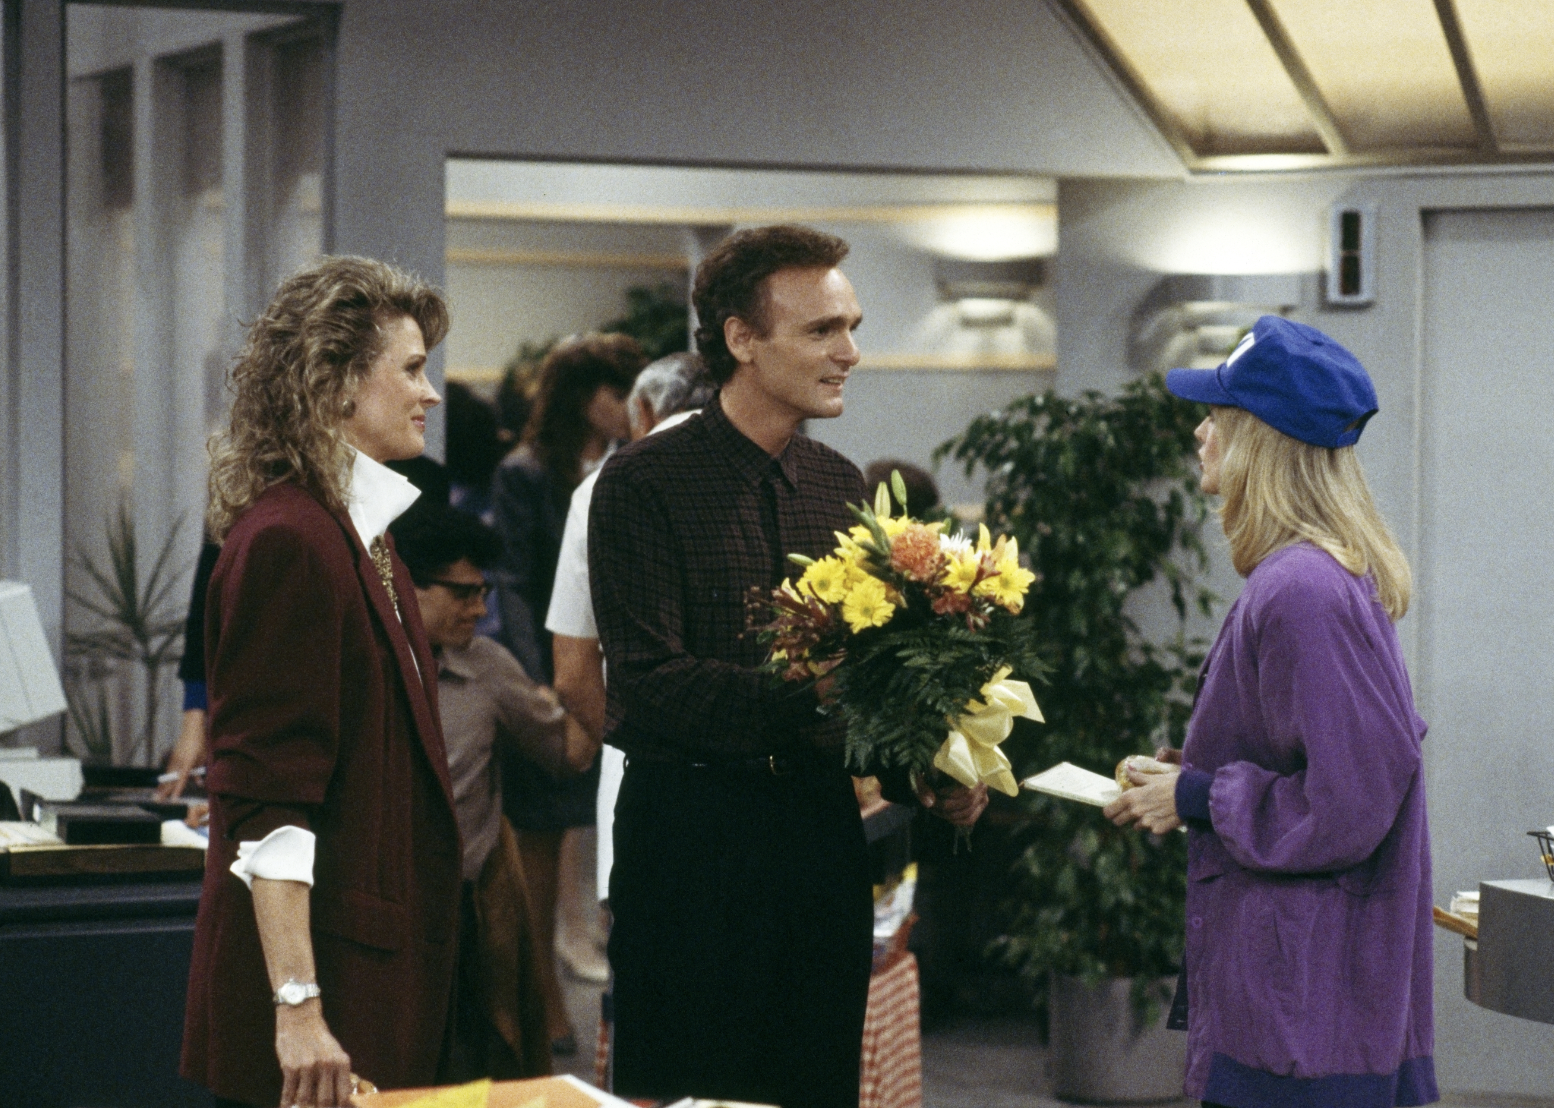 Candice Bergen, Morgan Fairchild, and Joe Regalbuto in "Murphy Brown"